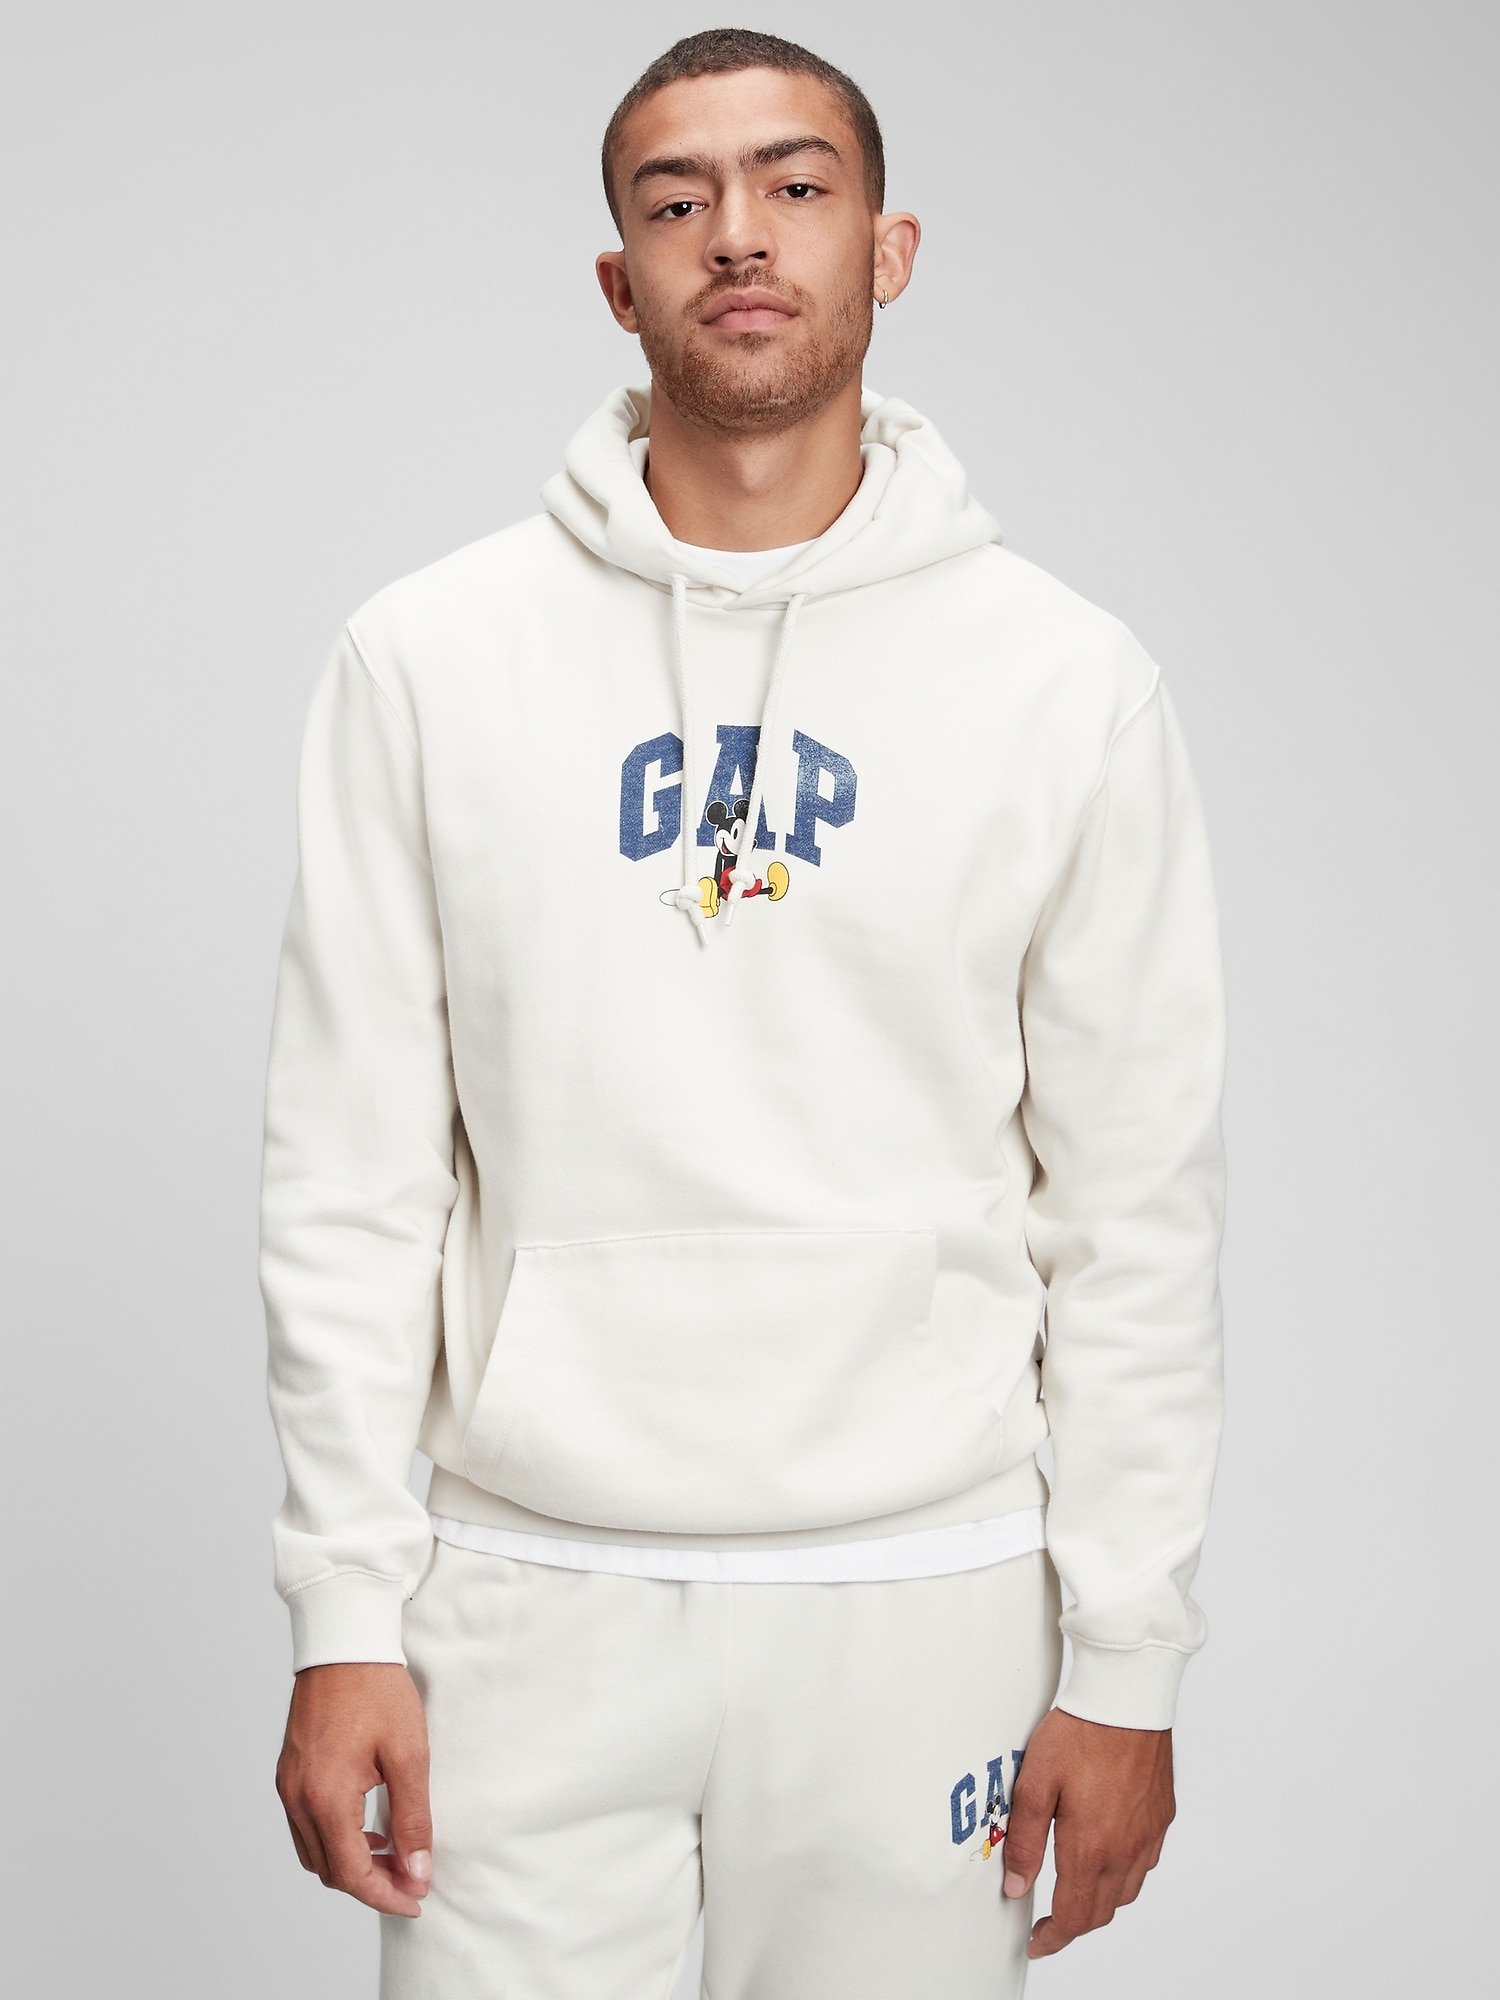 Gap x Disney Logo Kapüşonlu Sweatshirt product image